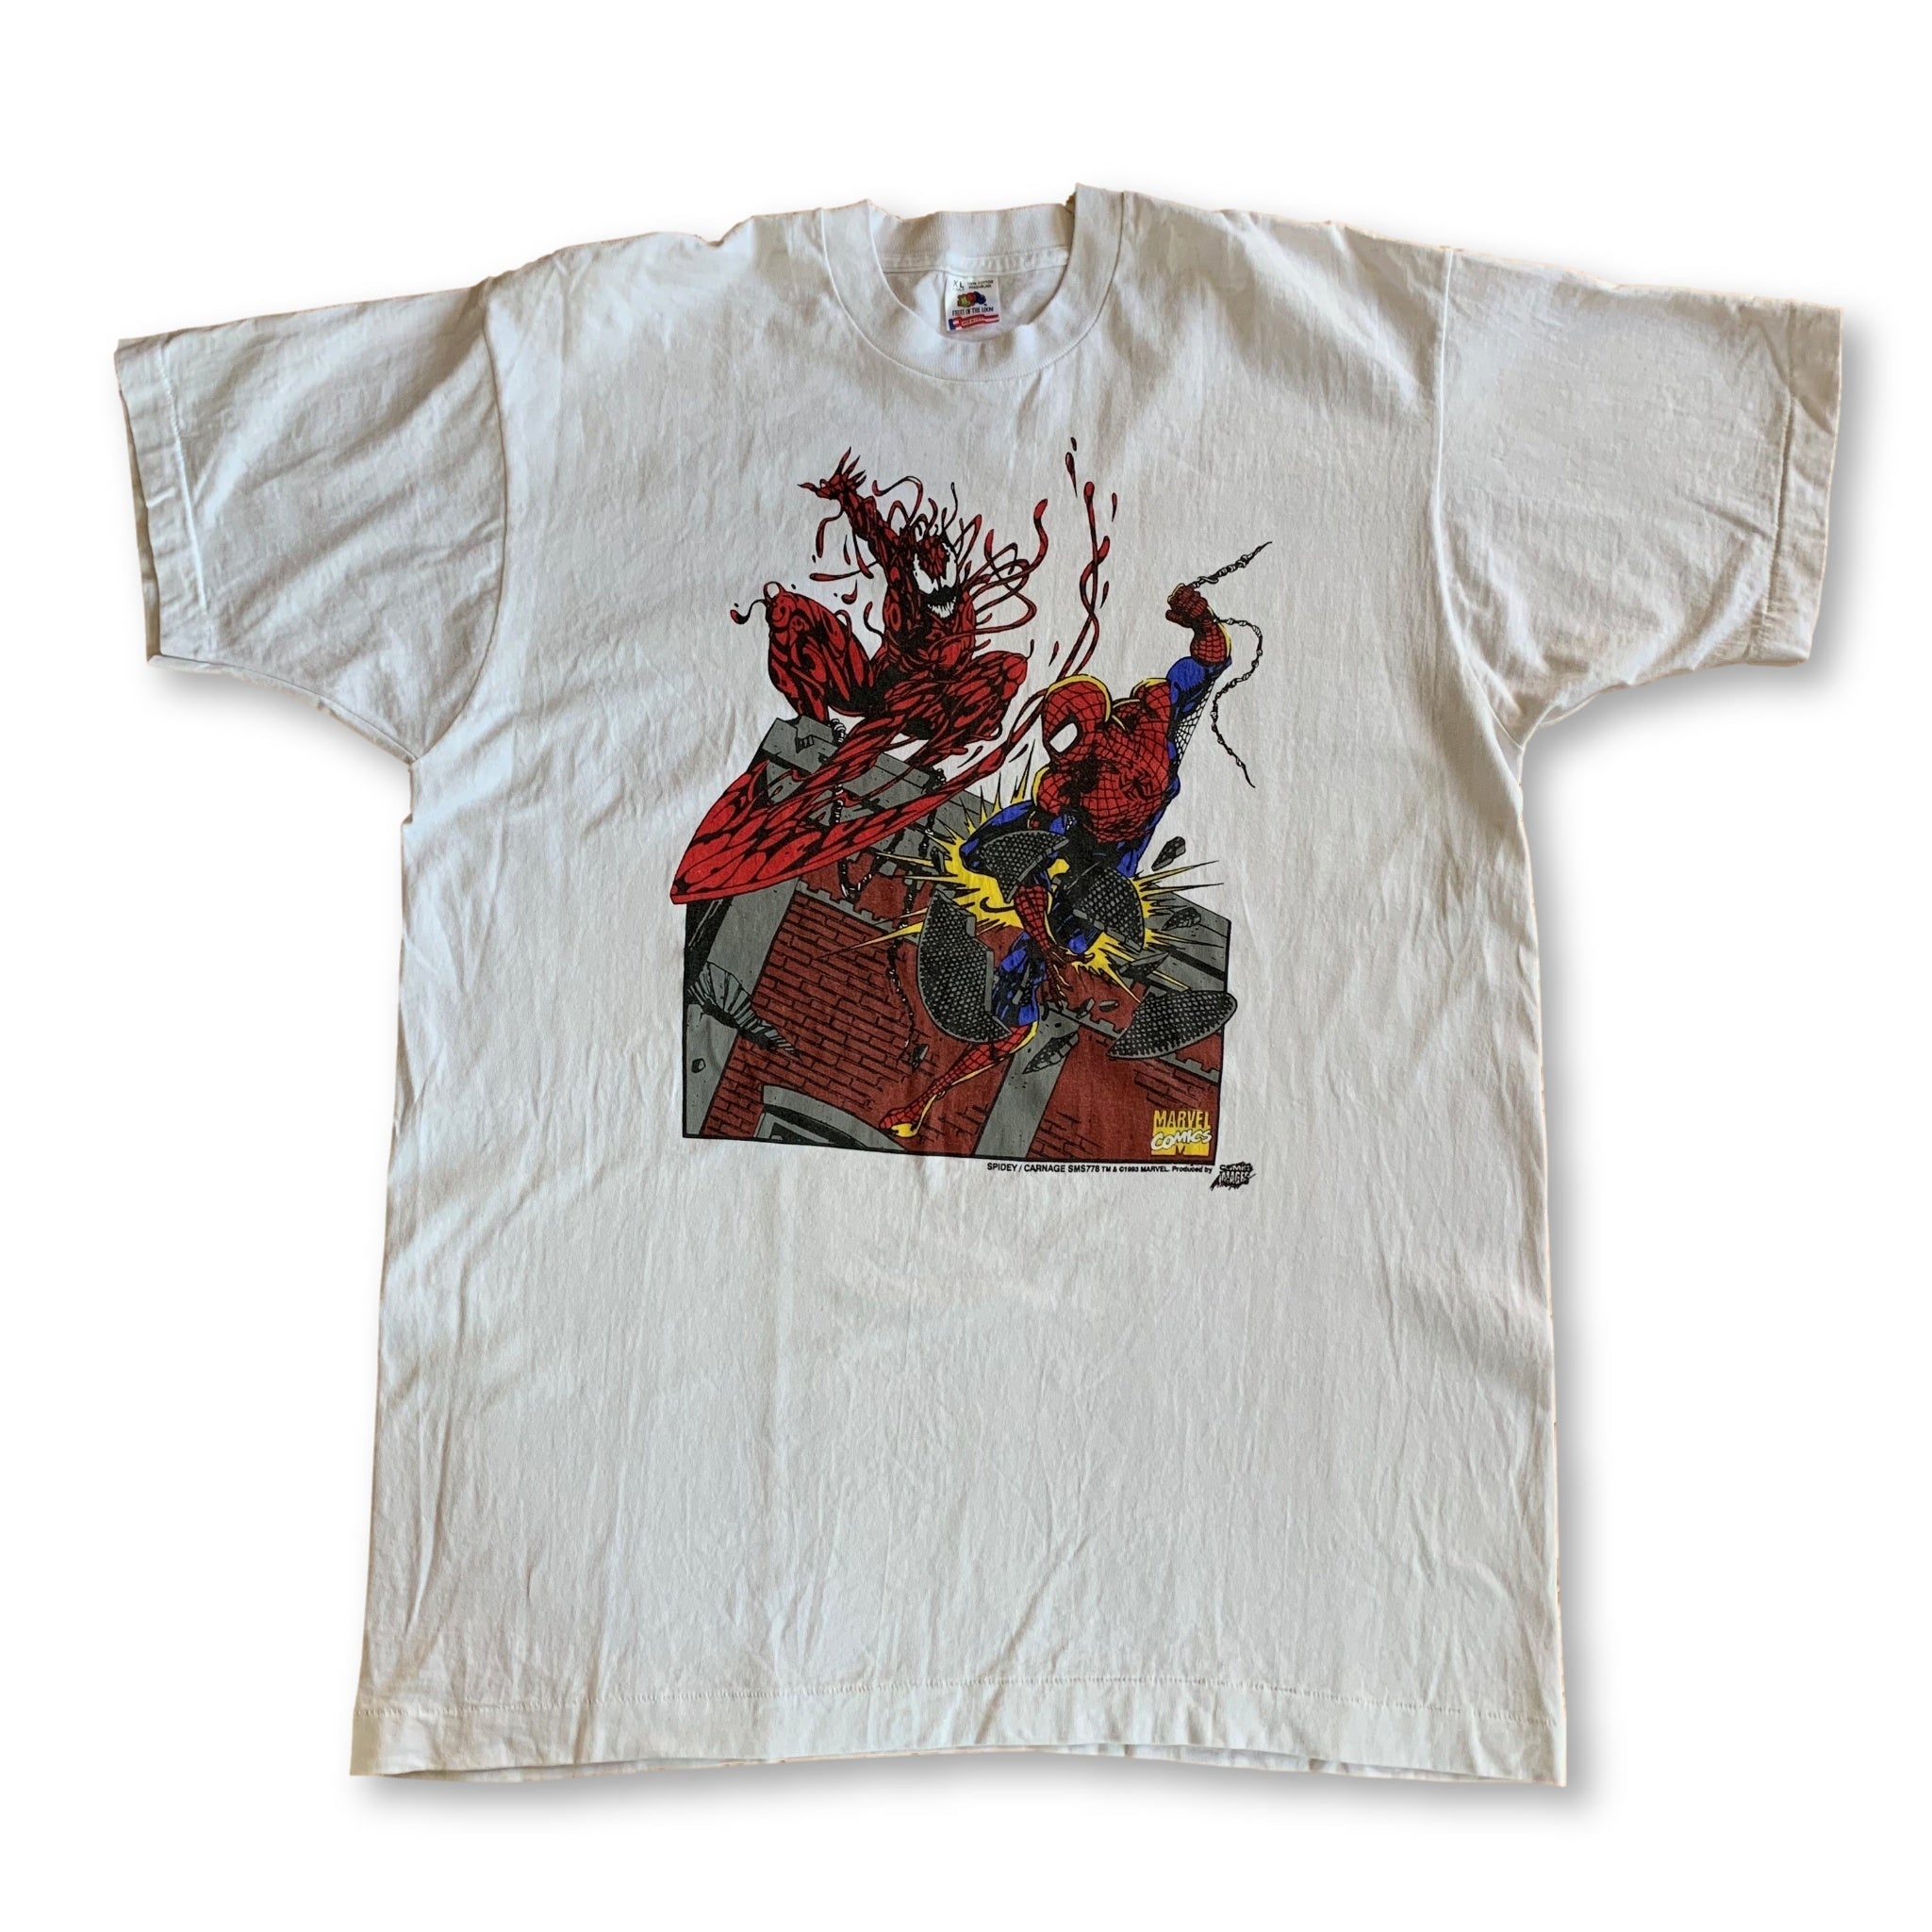 Vintage 1993 Marvel Comics T-Shirt - XL